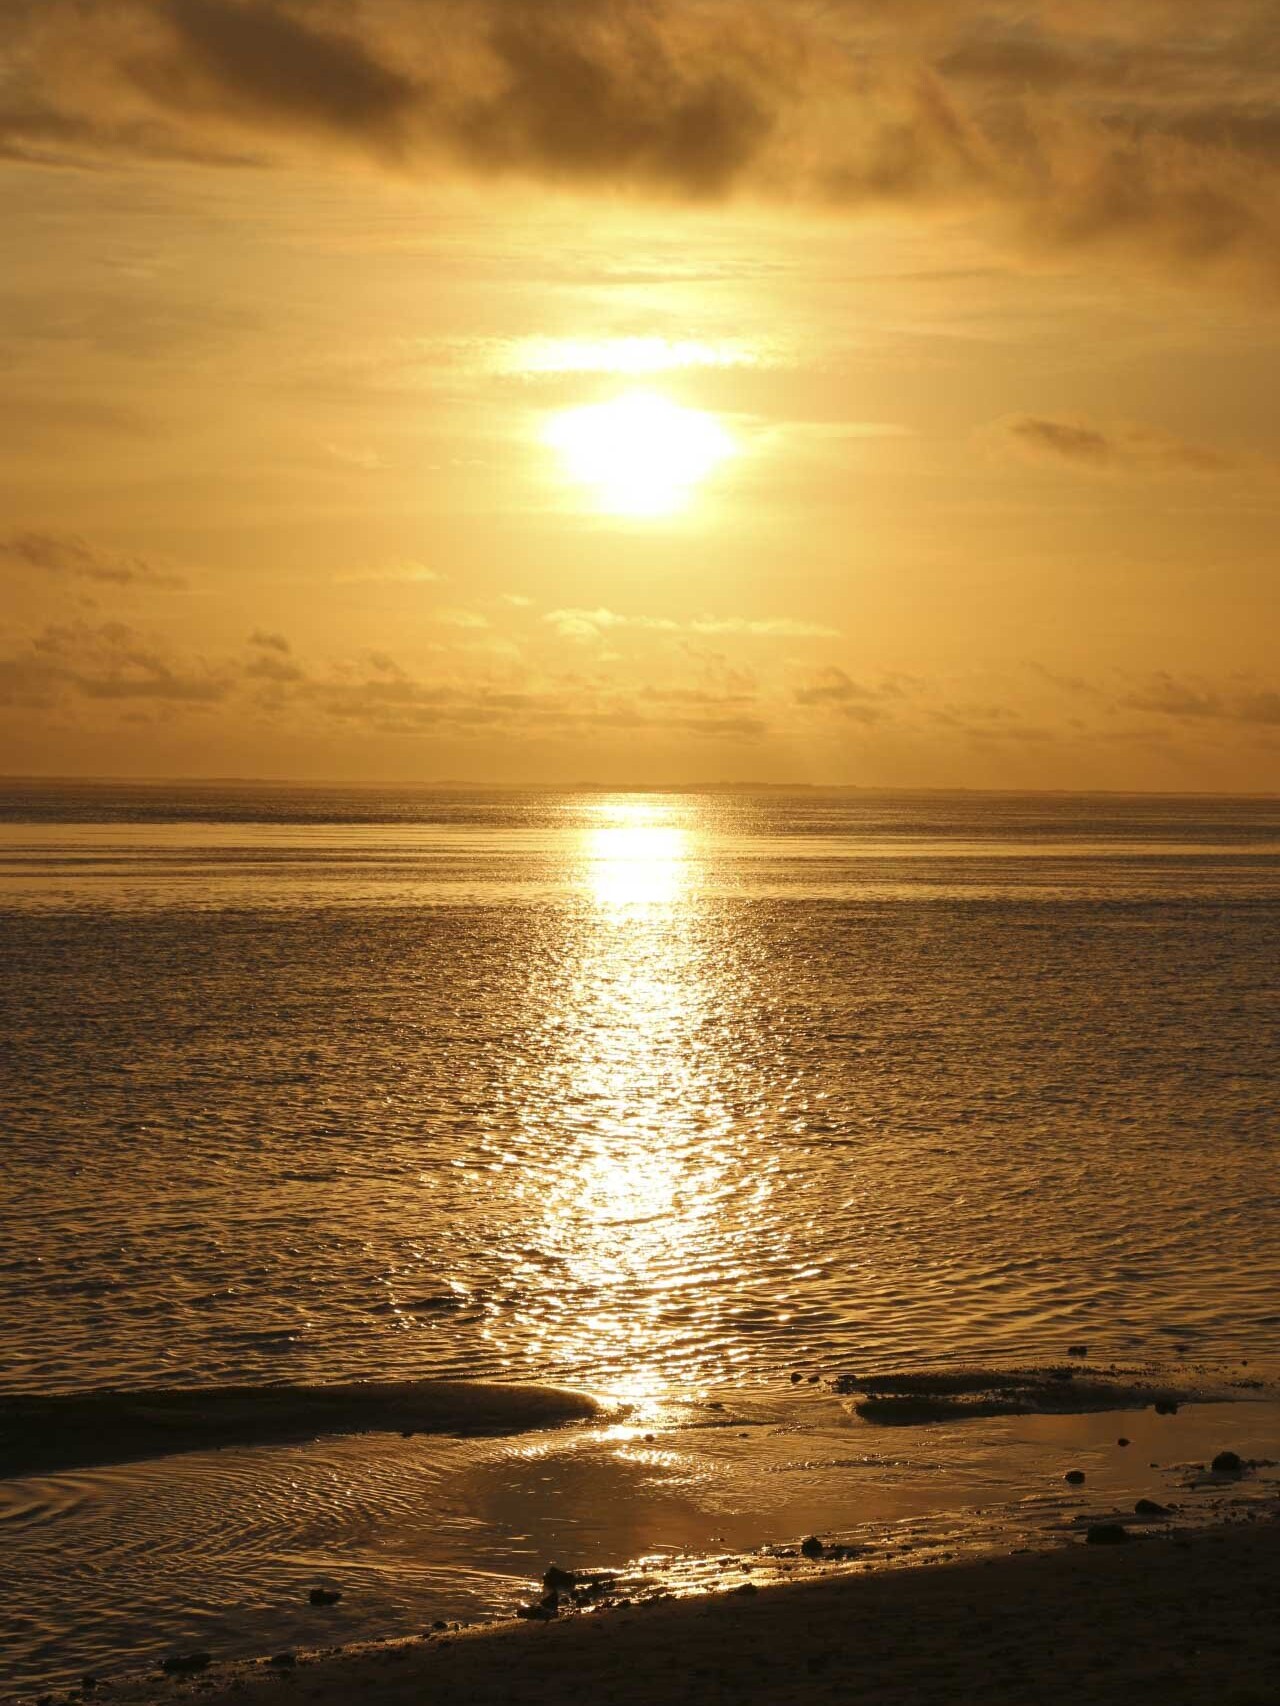 Sunset making the water glisten in Mauritius